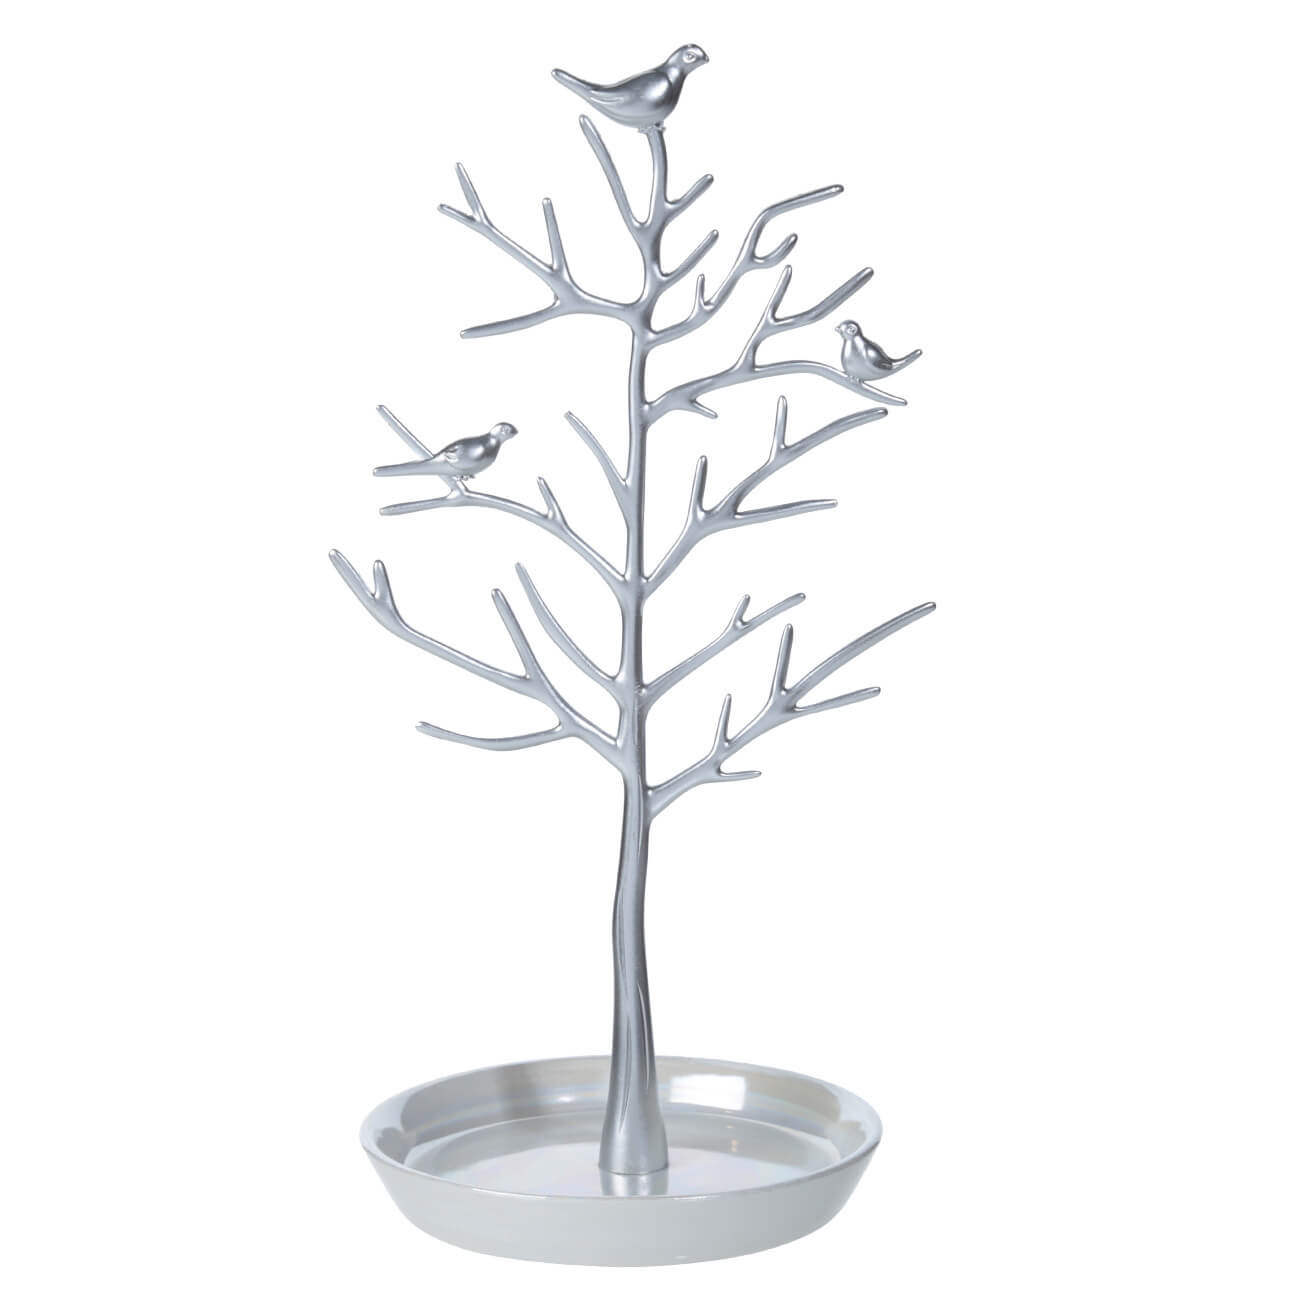 Держатель для украшений, 30 см, металл, серебристый, Дерево с птицами, Magic tree фен scarlett sc hd70it02 1 300 вт серебристый